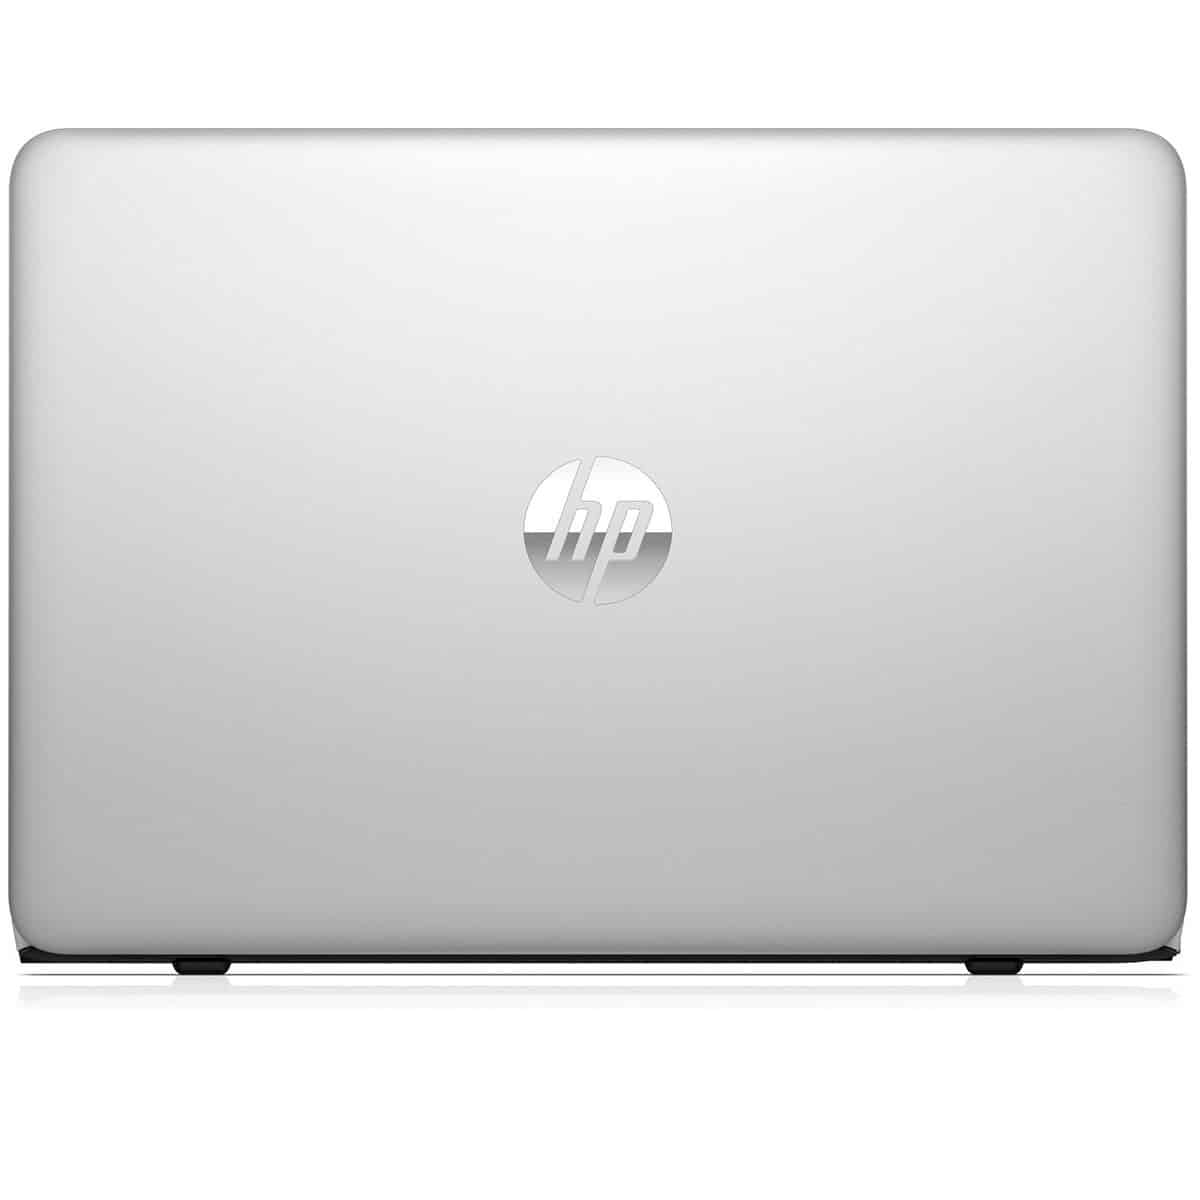 HP Elitebook 840 G3 WLAN WIFI Wireless Board and Bluetooth card